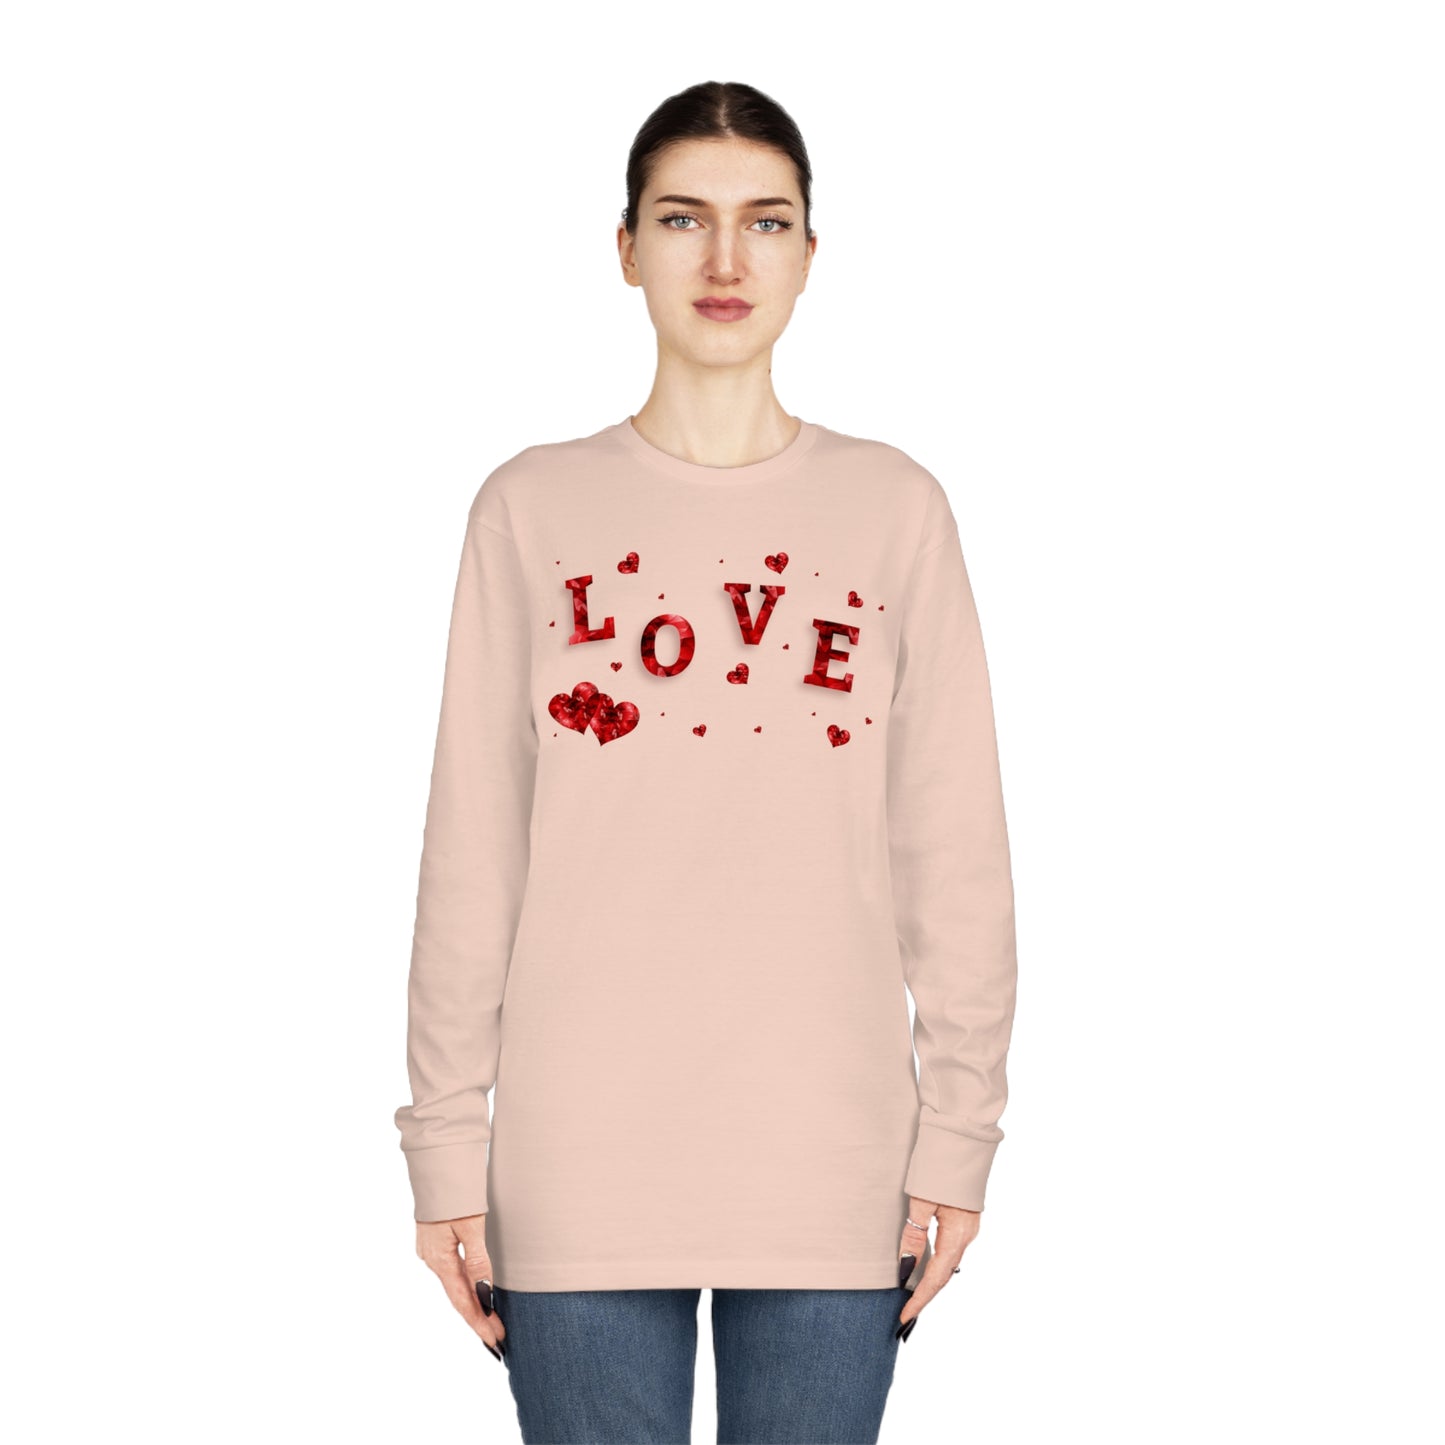 Love / Valentine's Day Long Sleeve Tee / Cute Valentines Day Shirt / Heart Shirt / Valentines Day Shirts For Women / Heart T-shirt